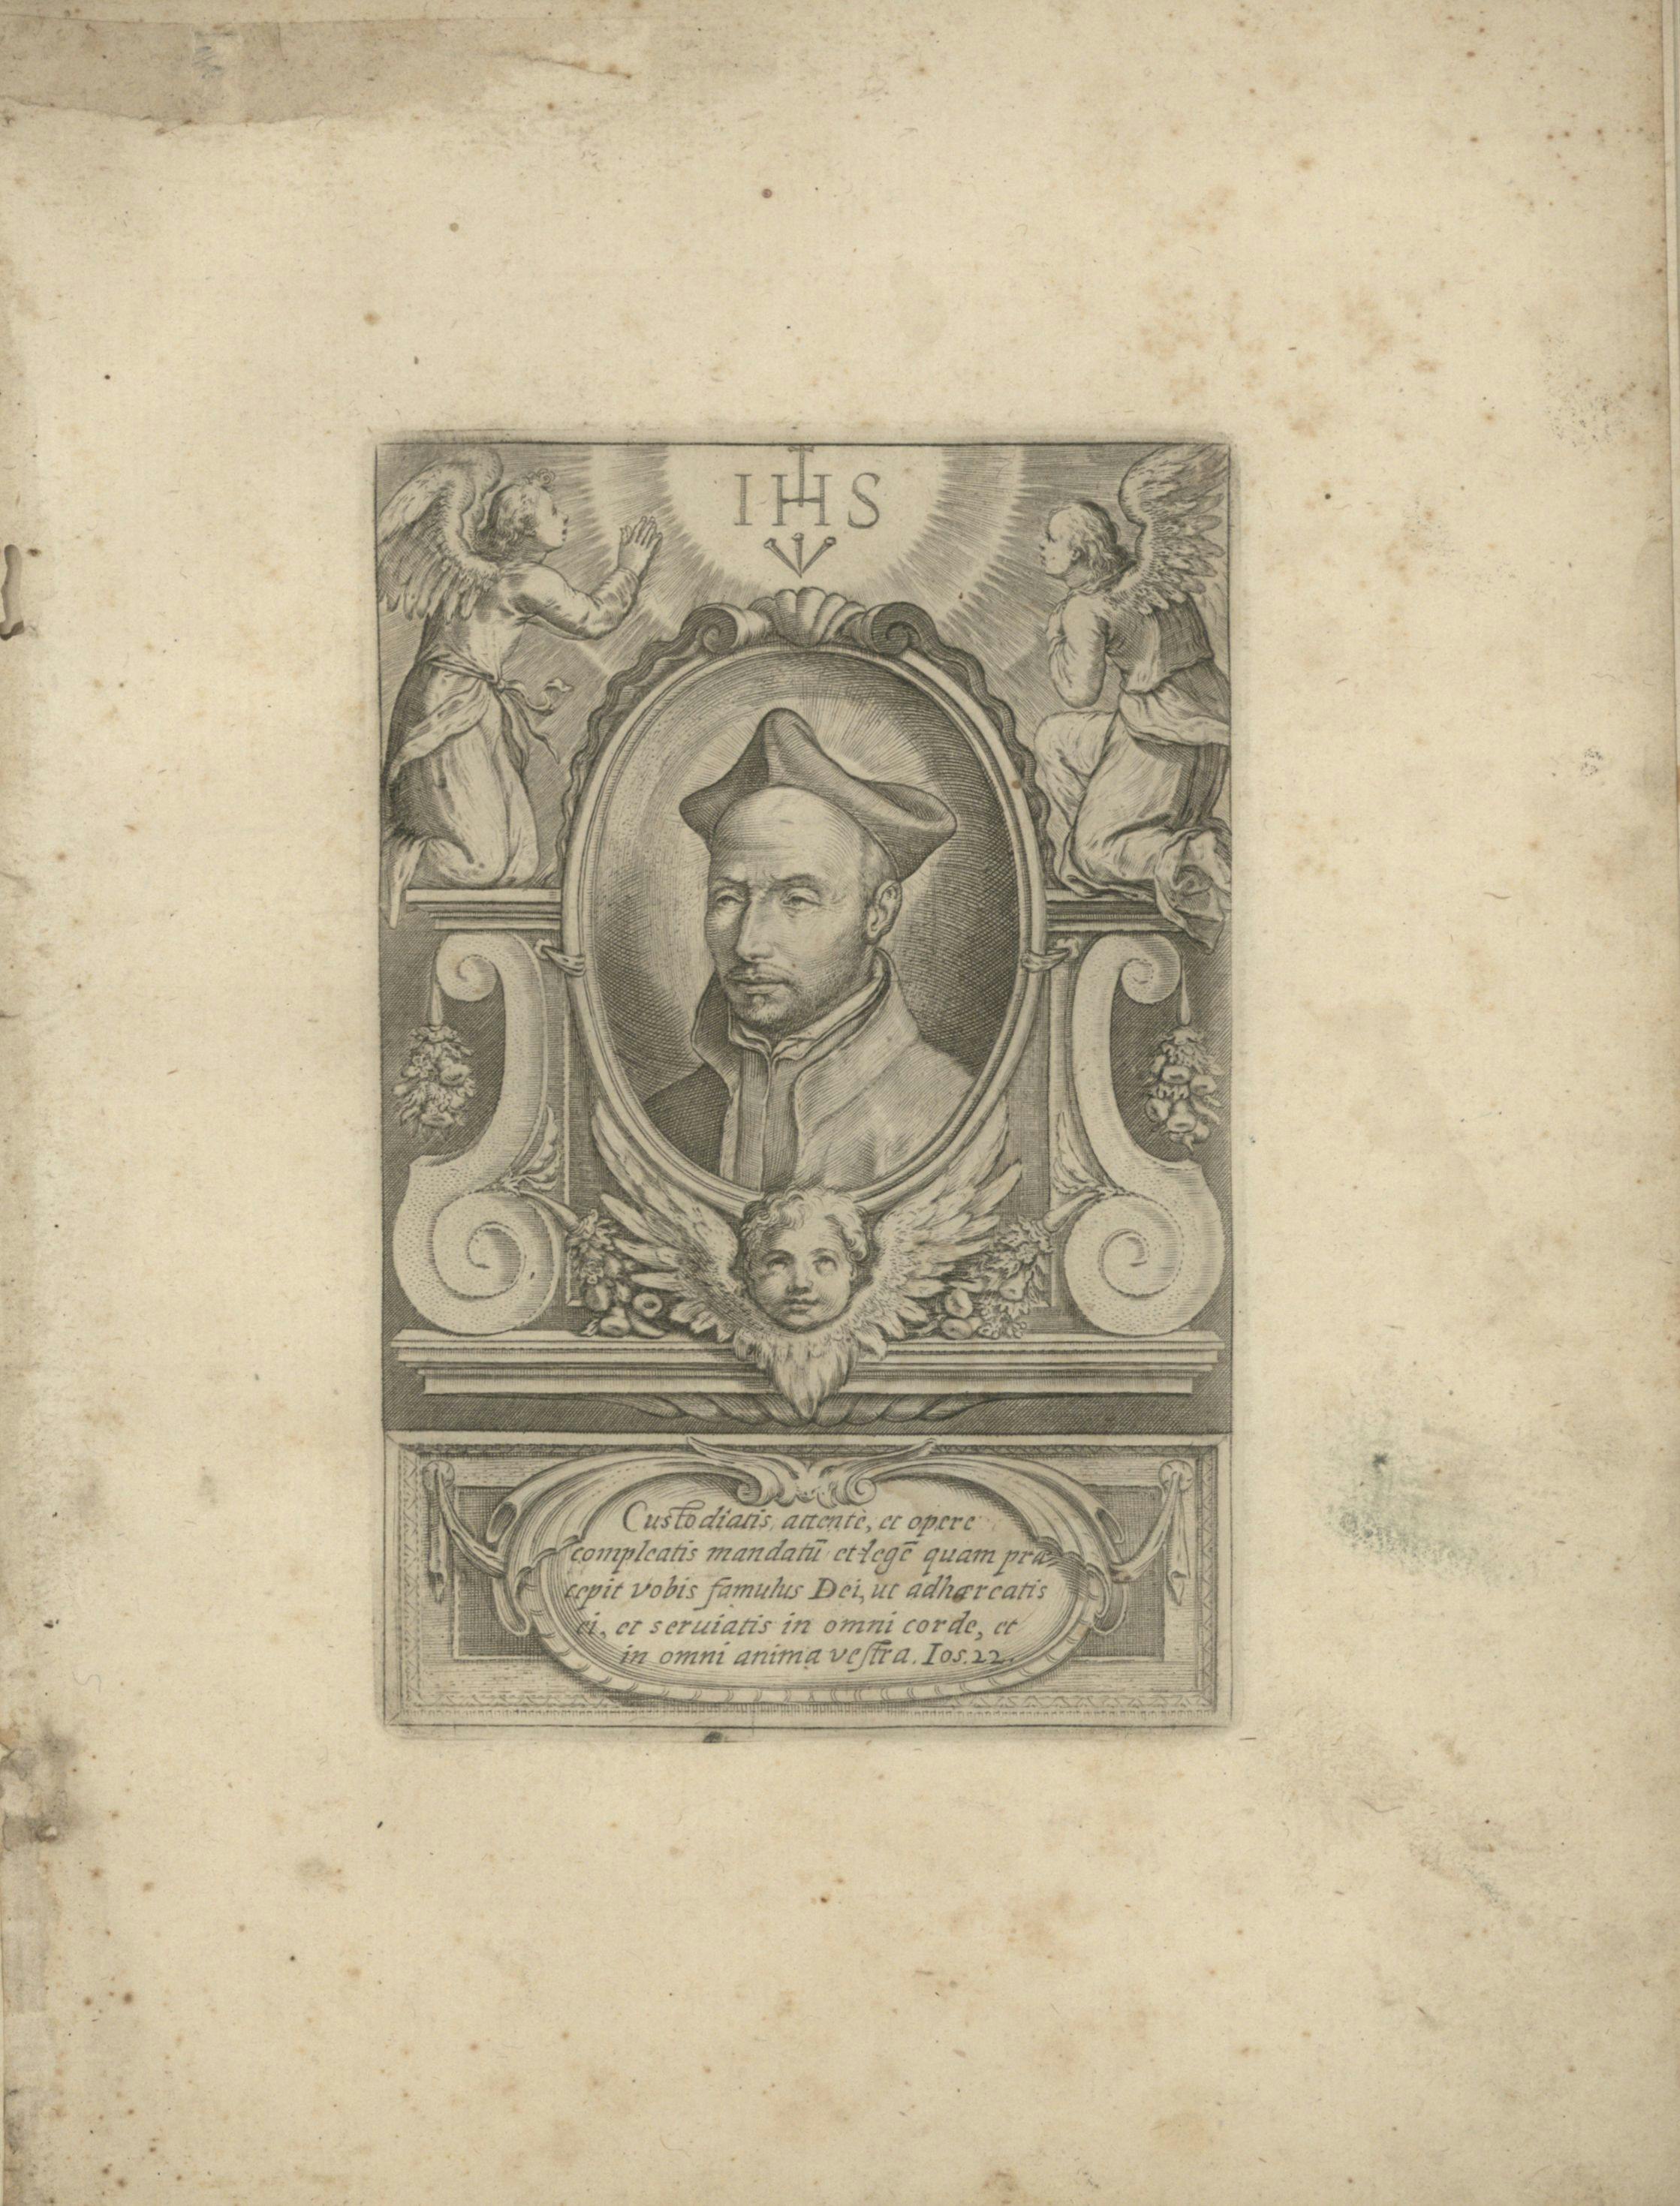 De vita et morib. Ignatii Loiolae, by Giovanni Pietro Maffei (1536? – 1603), Romae: Apud Franciscum Zannettum, 1585